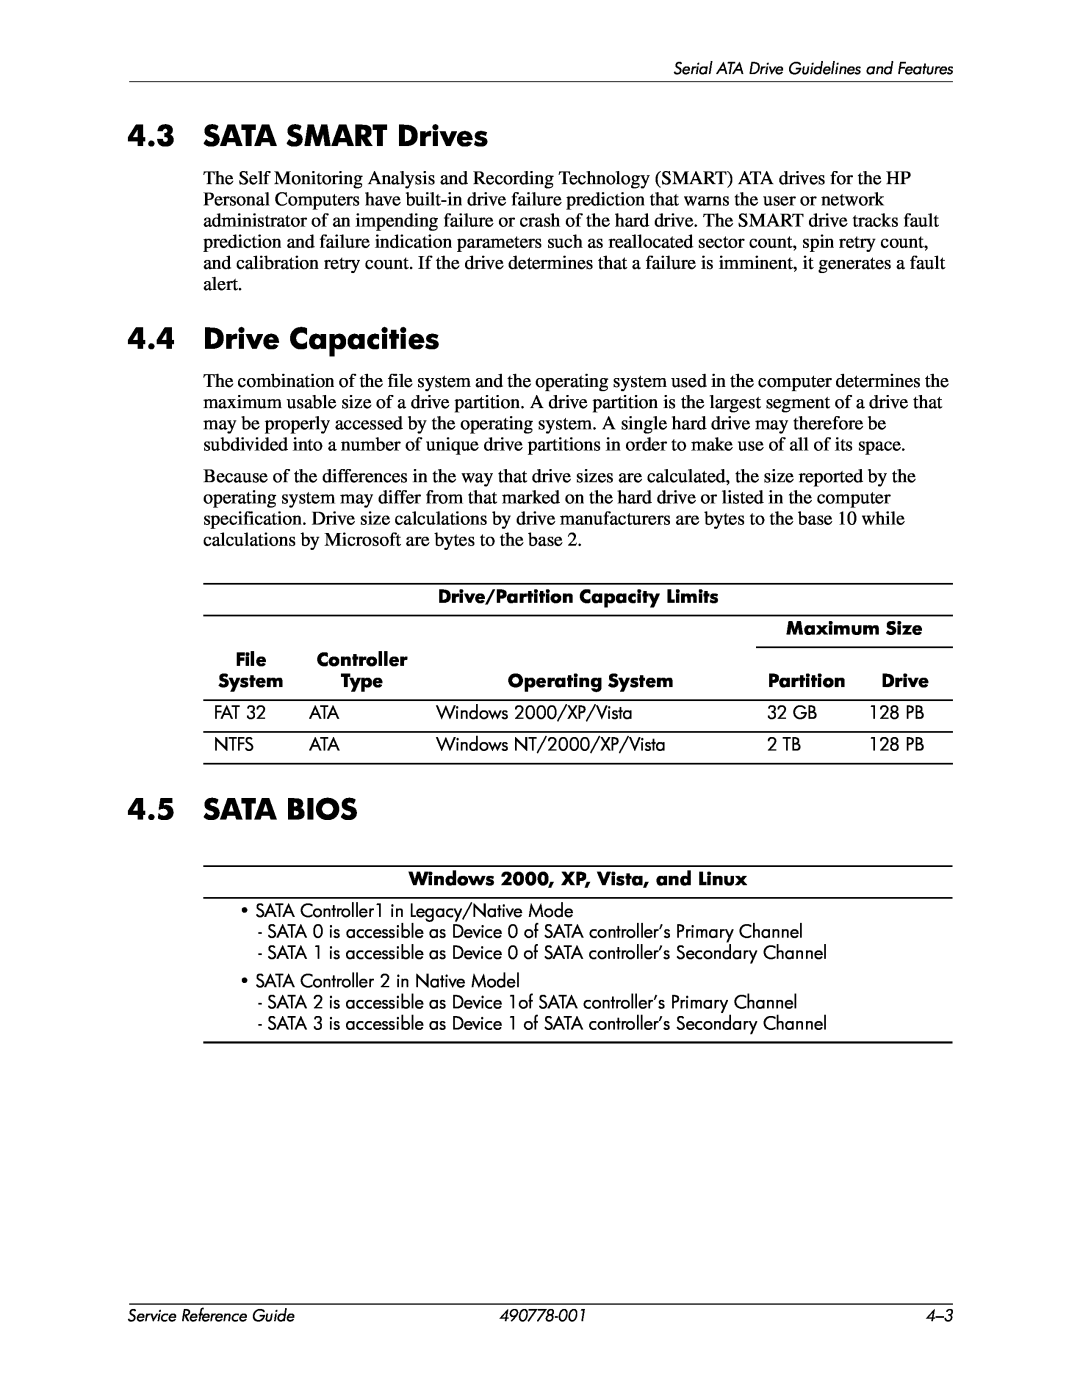 HP dx2310 manual SATA SMART Drives, Drive Capacities, Sata Bios 